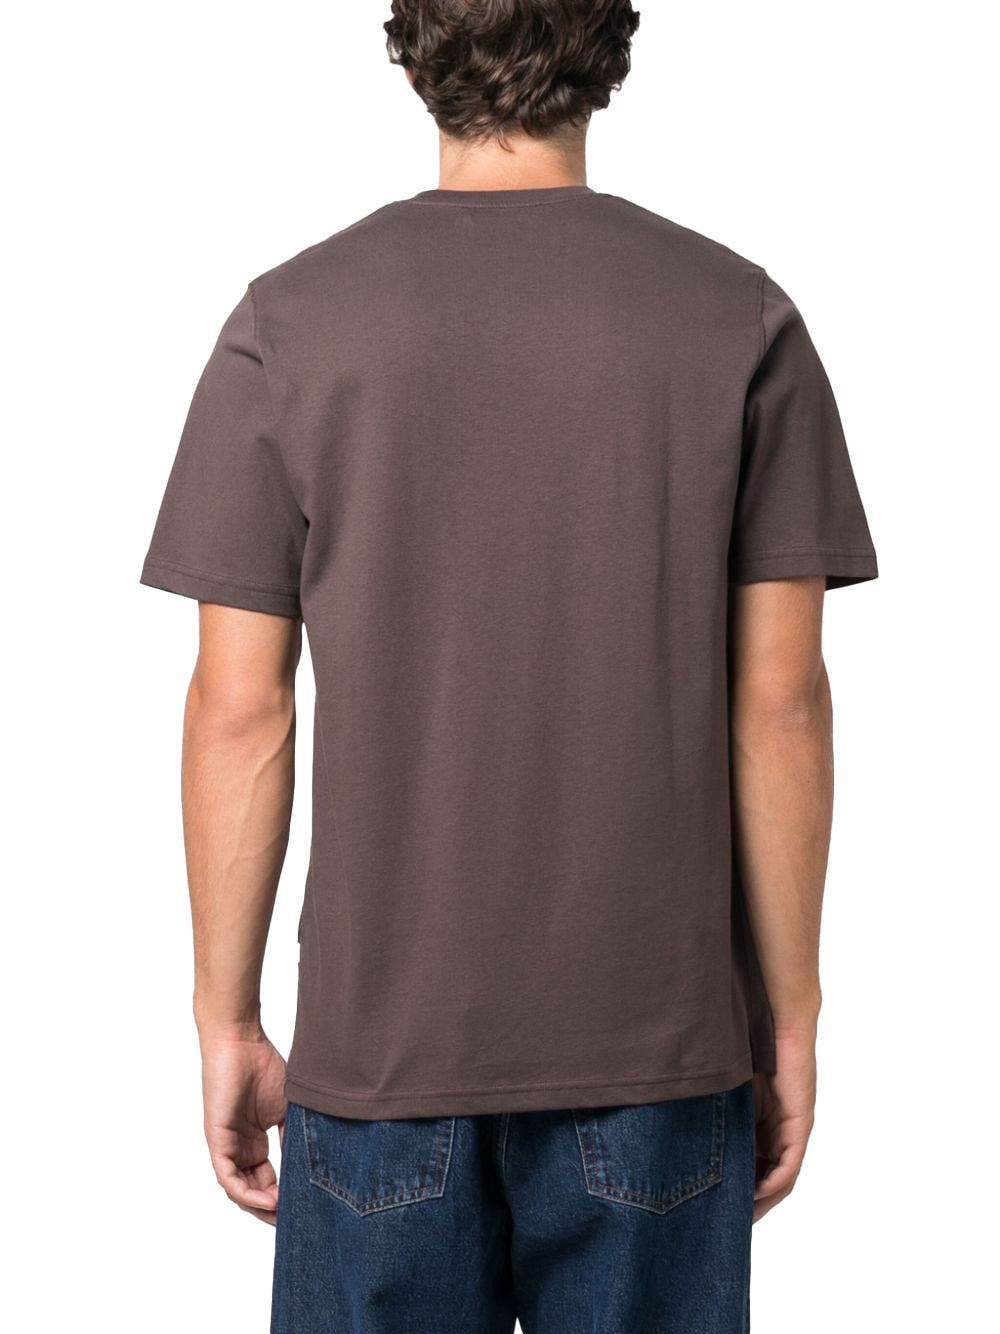 Essential Sami Brown T-shirt